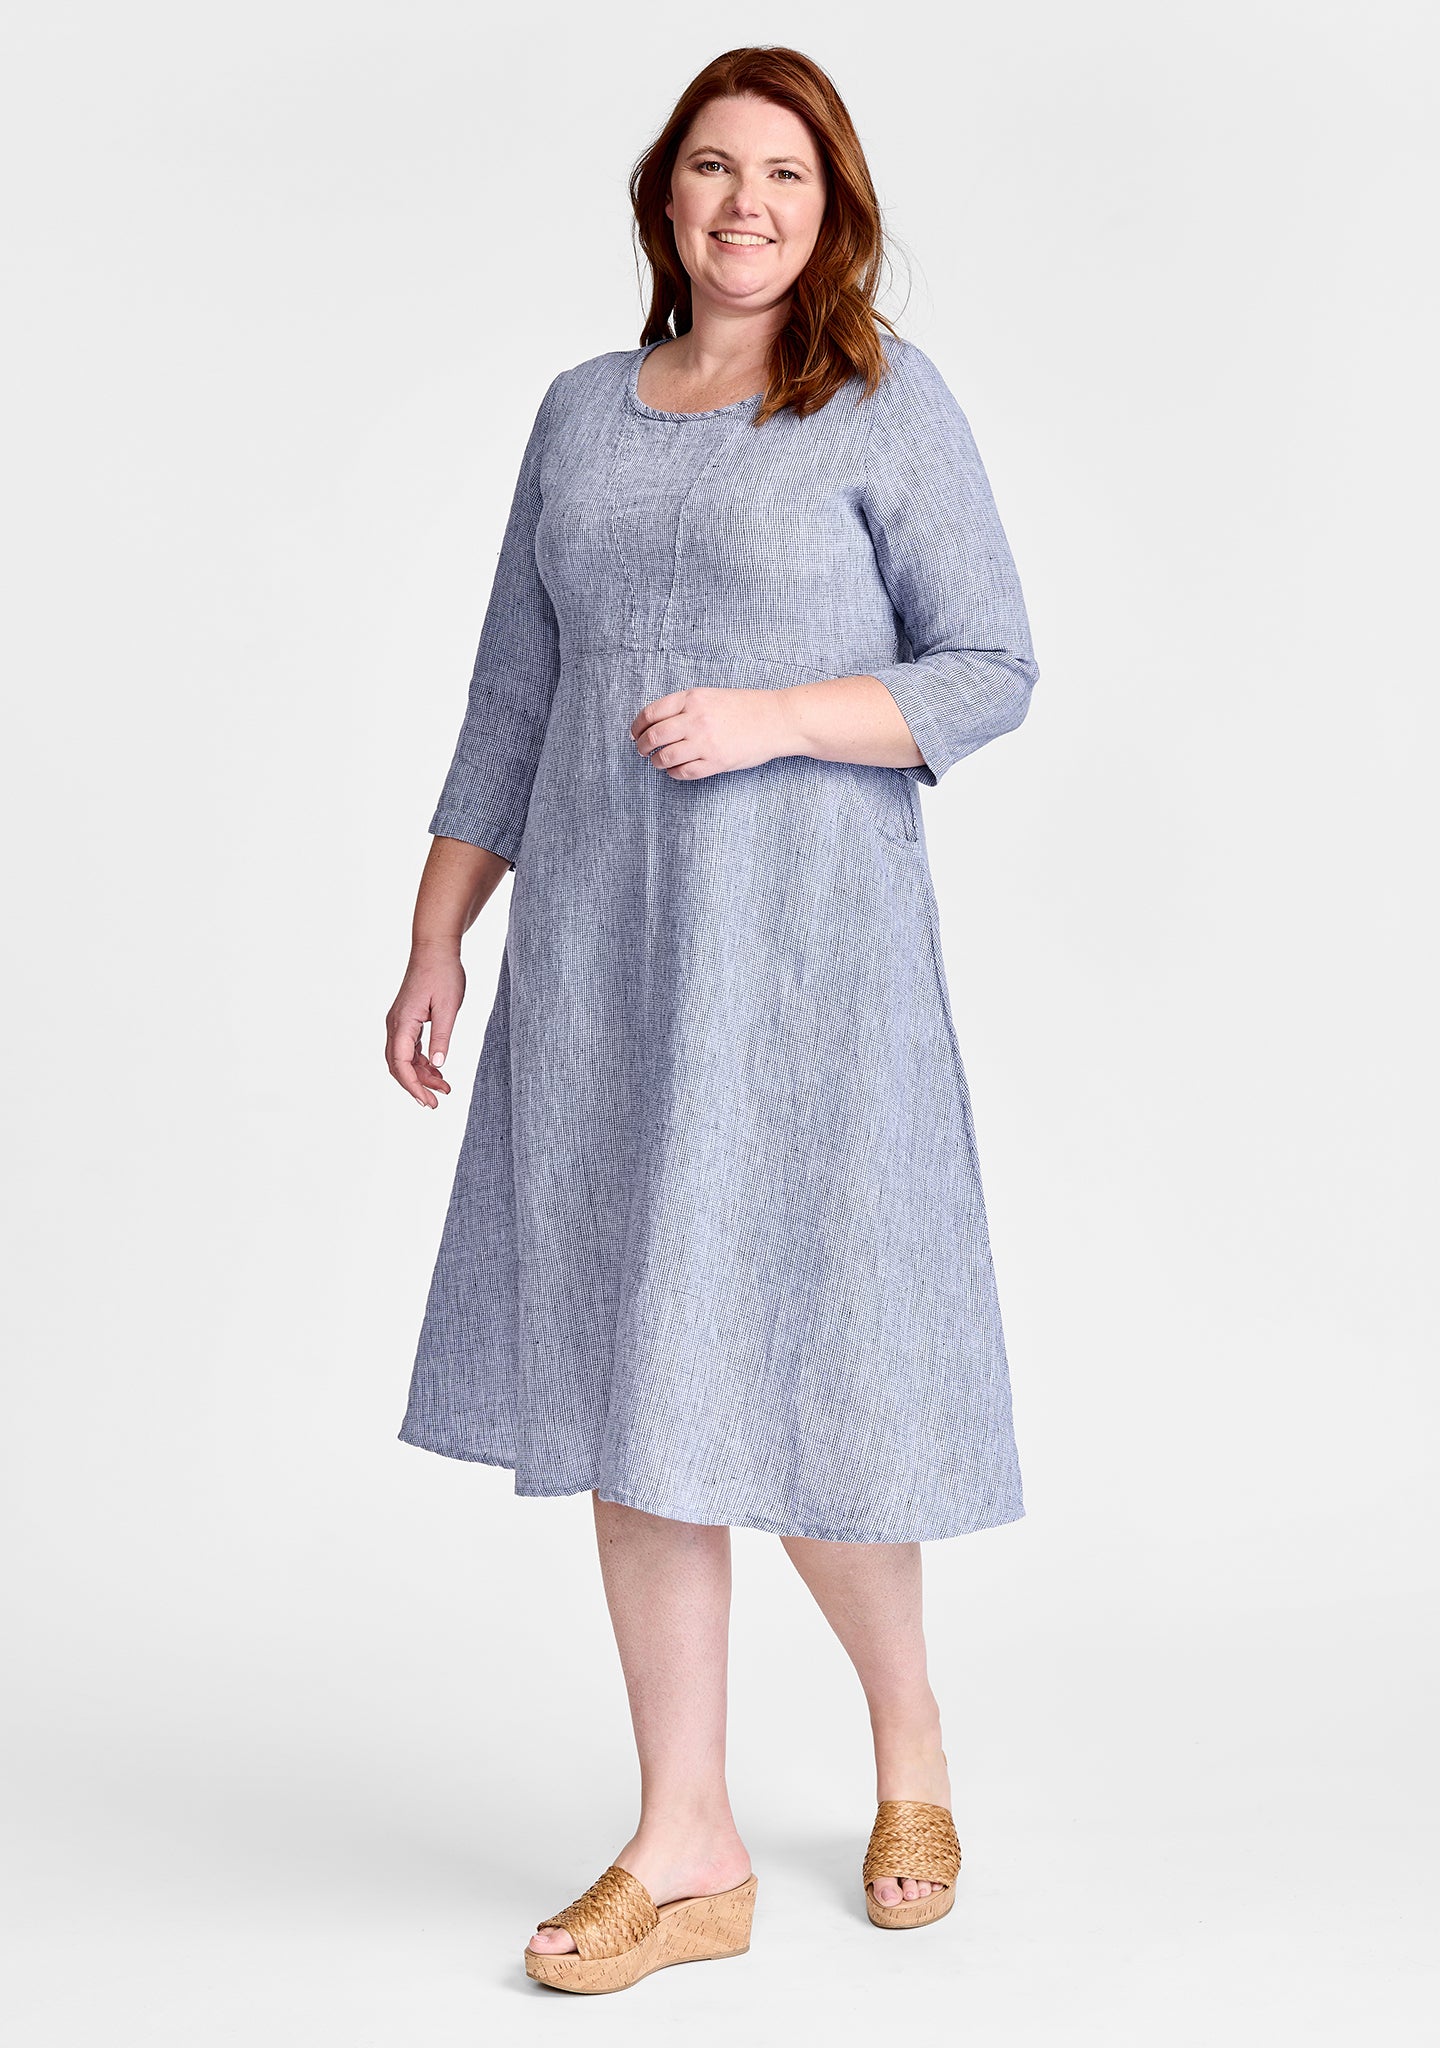 FLAX linen dress in blue